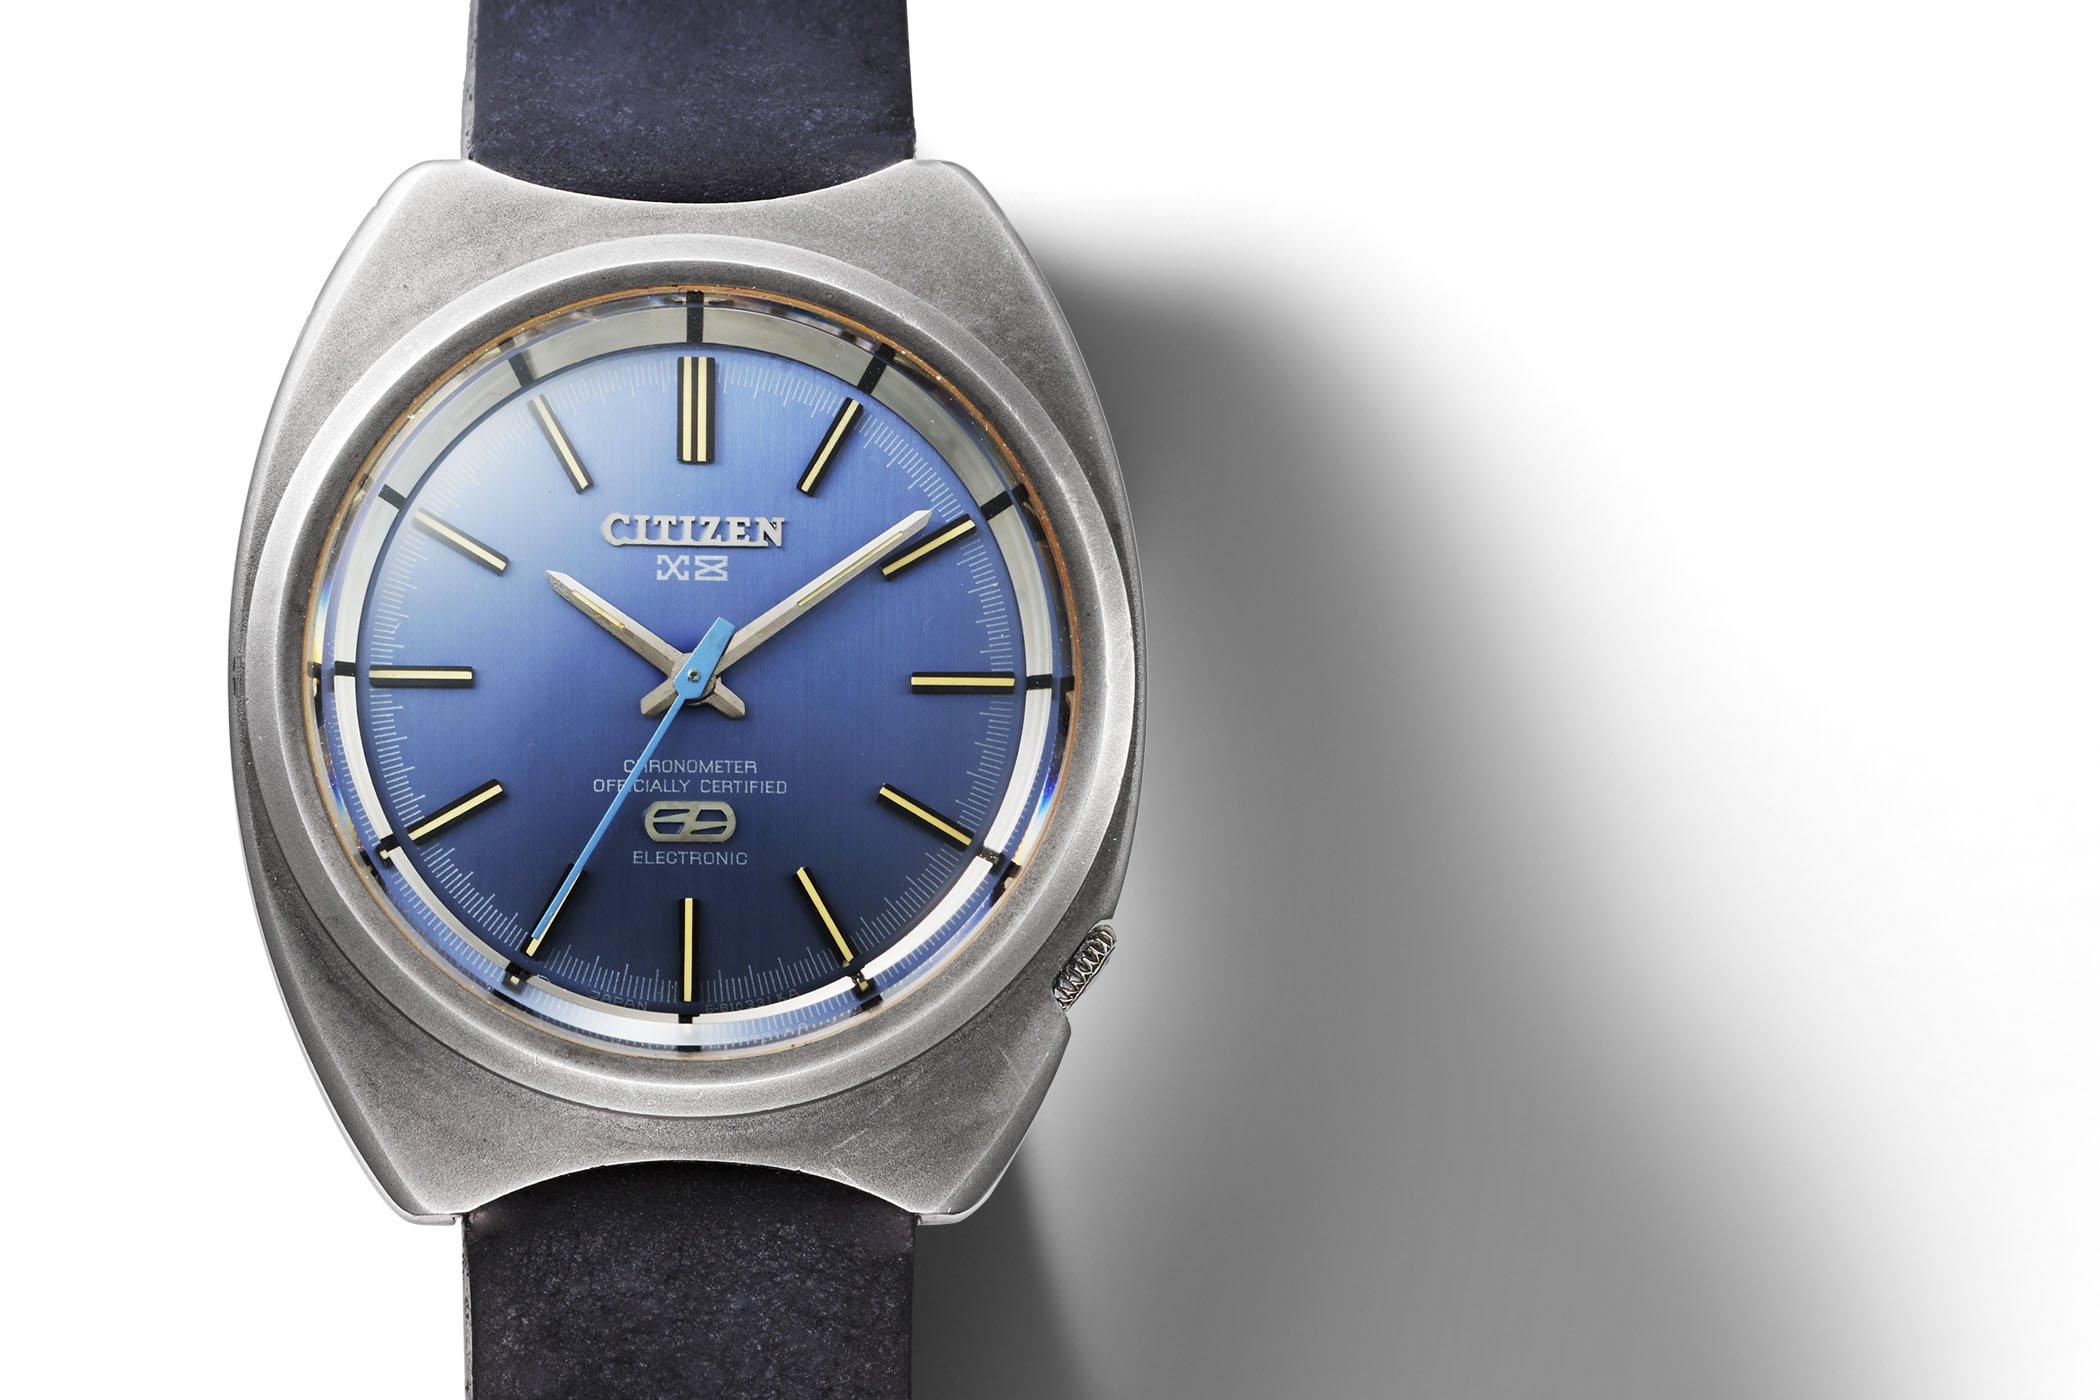 1970 Citizen X-8 Chronometer - first titanium watch